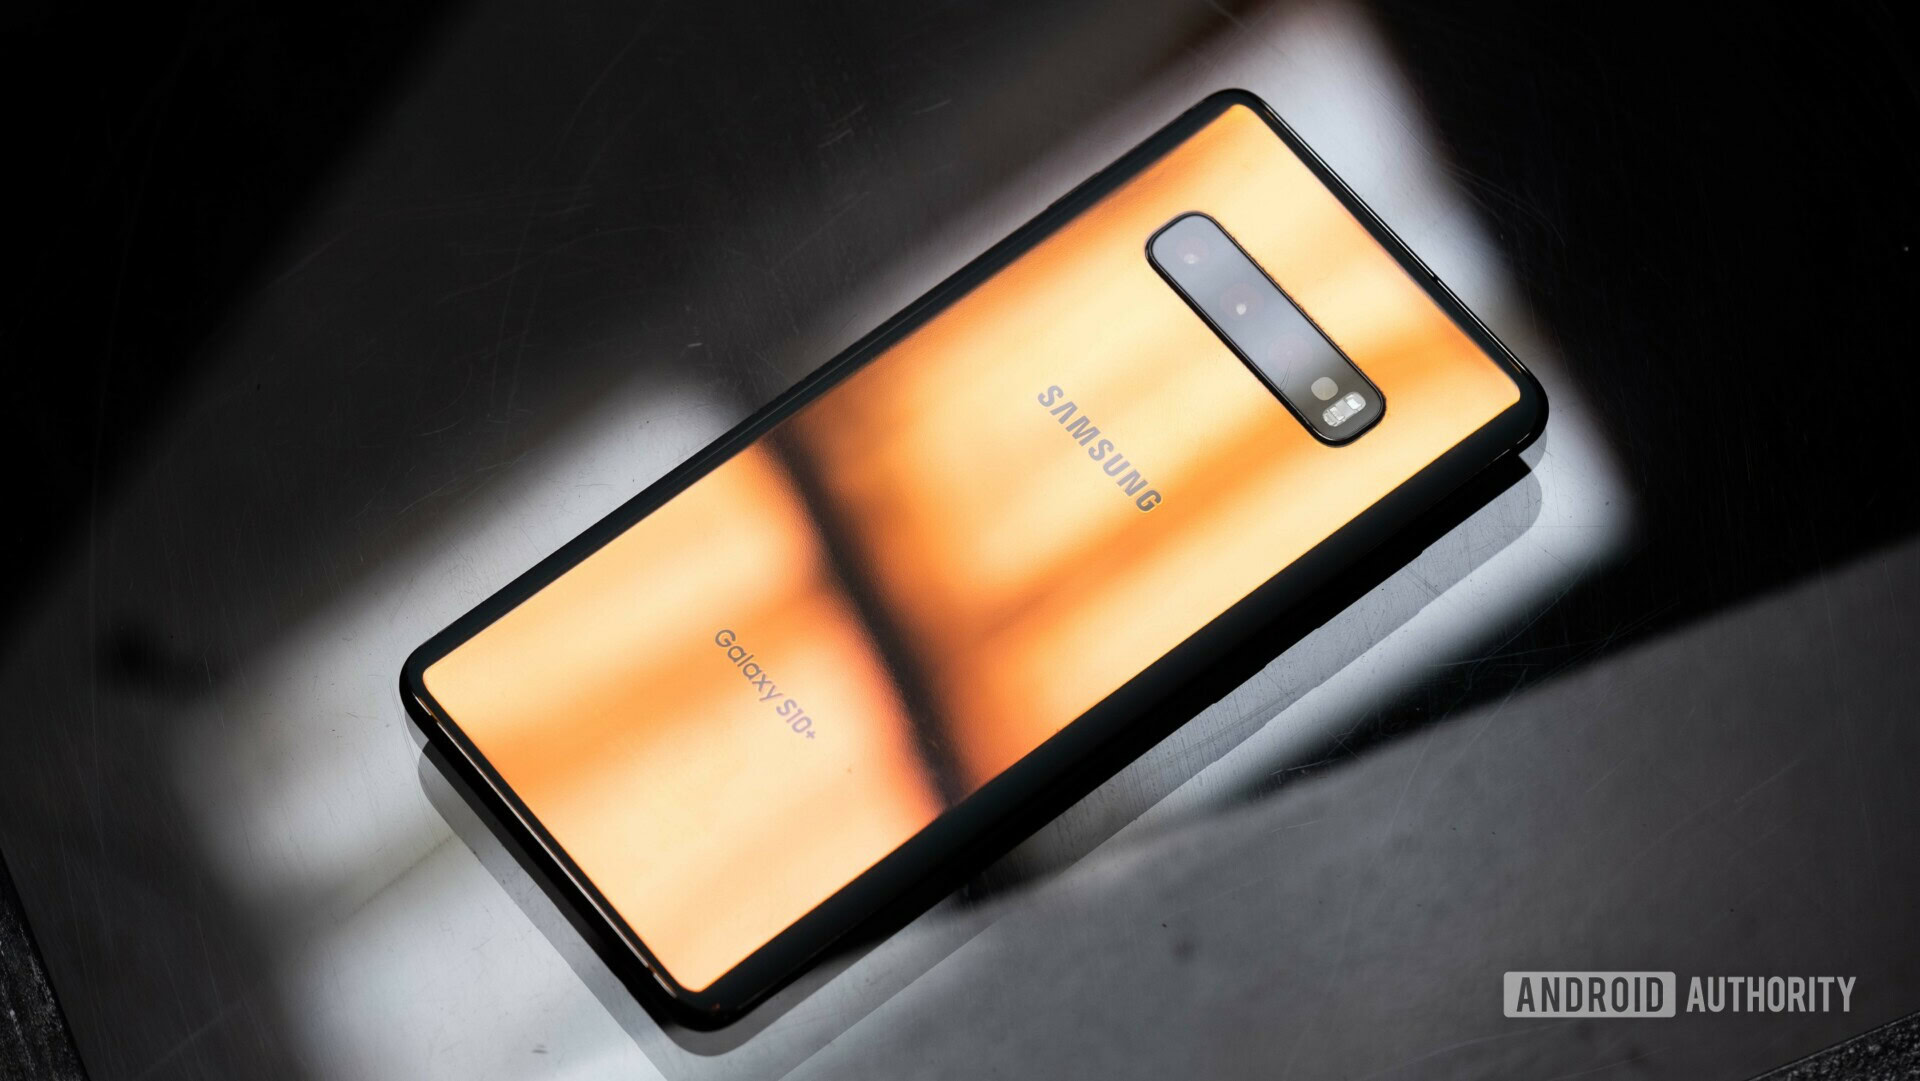 Samsung Galaxy S10e In 2022! (Still Worth It?) (Review) 